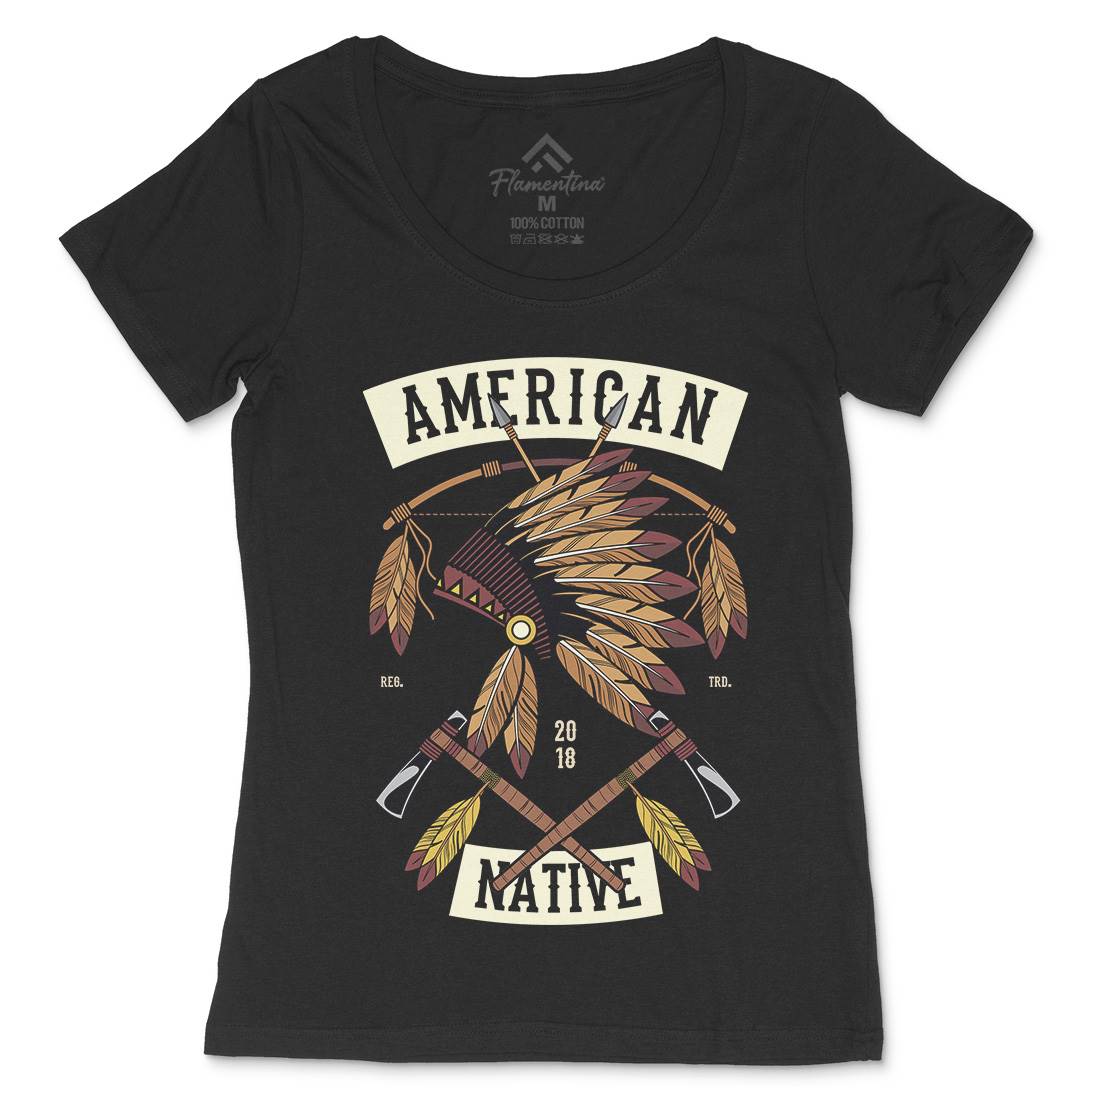 American Native Womens Scoop Neck T-Shirt American C303